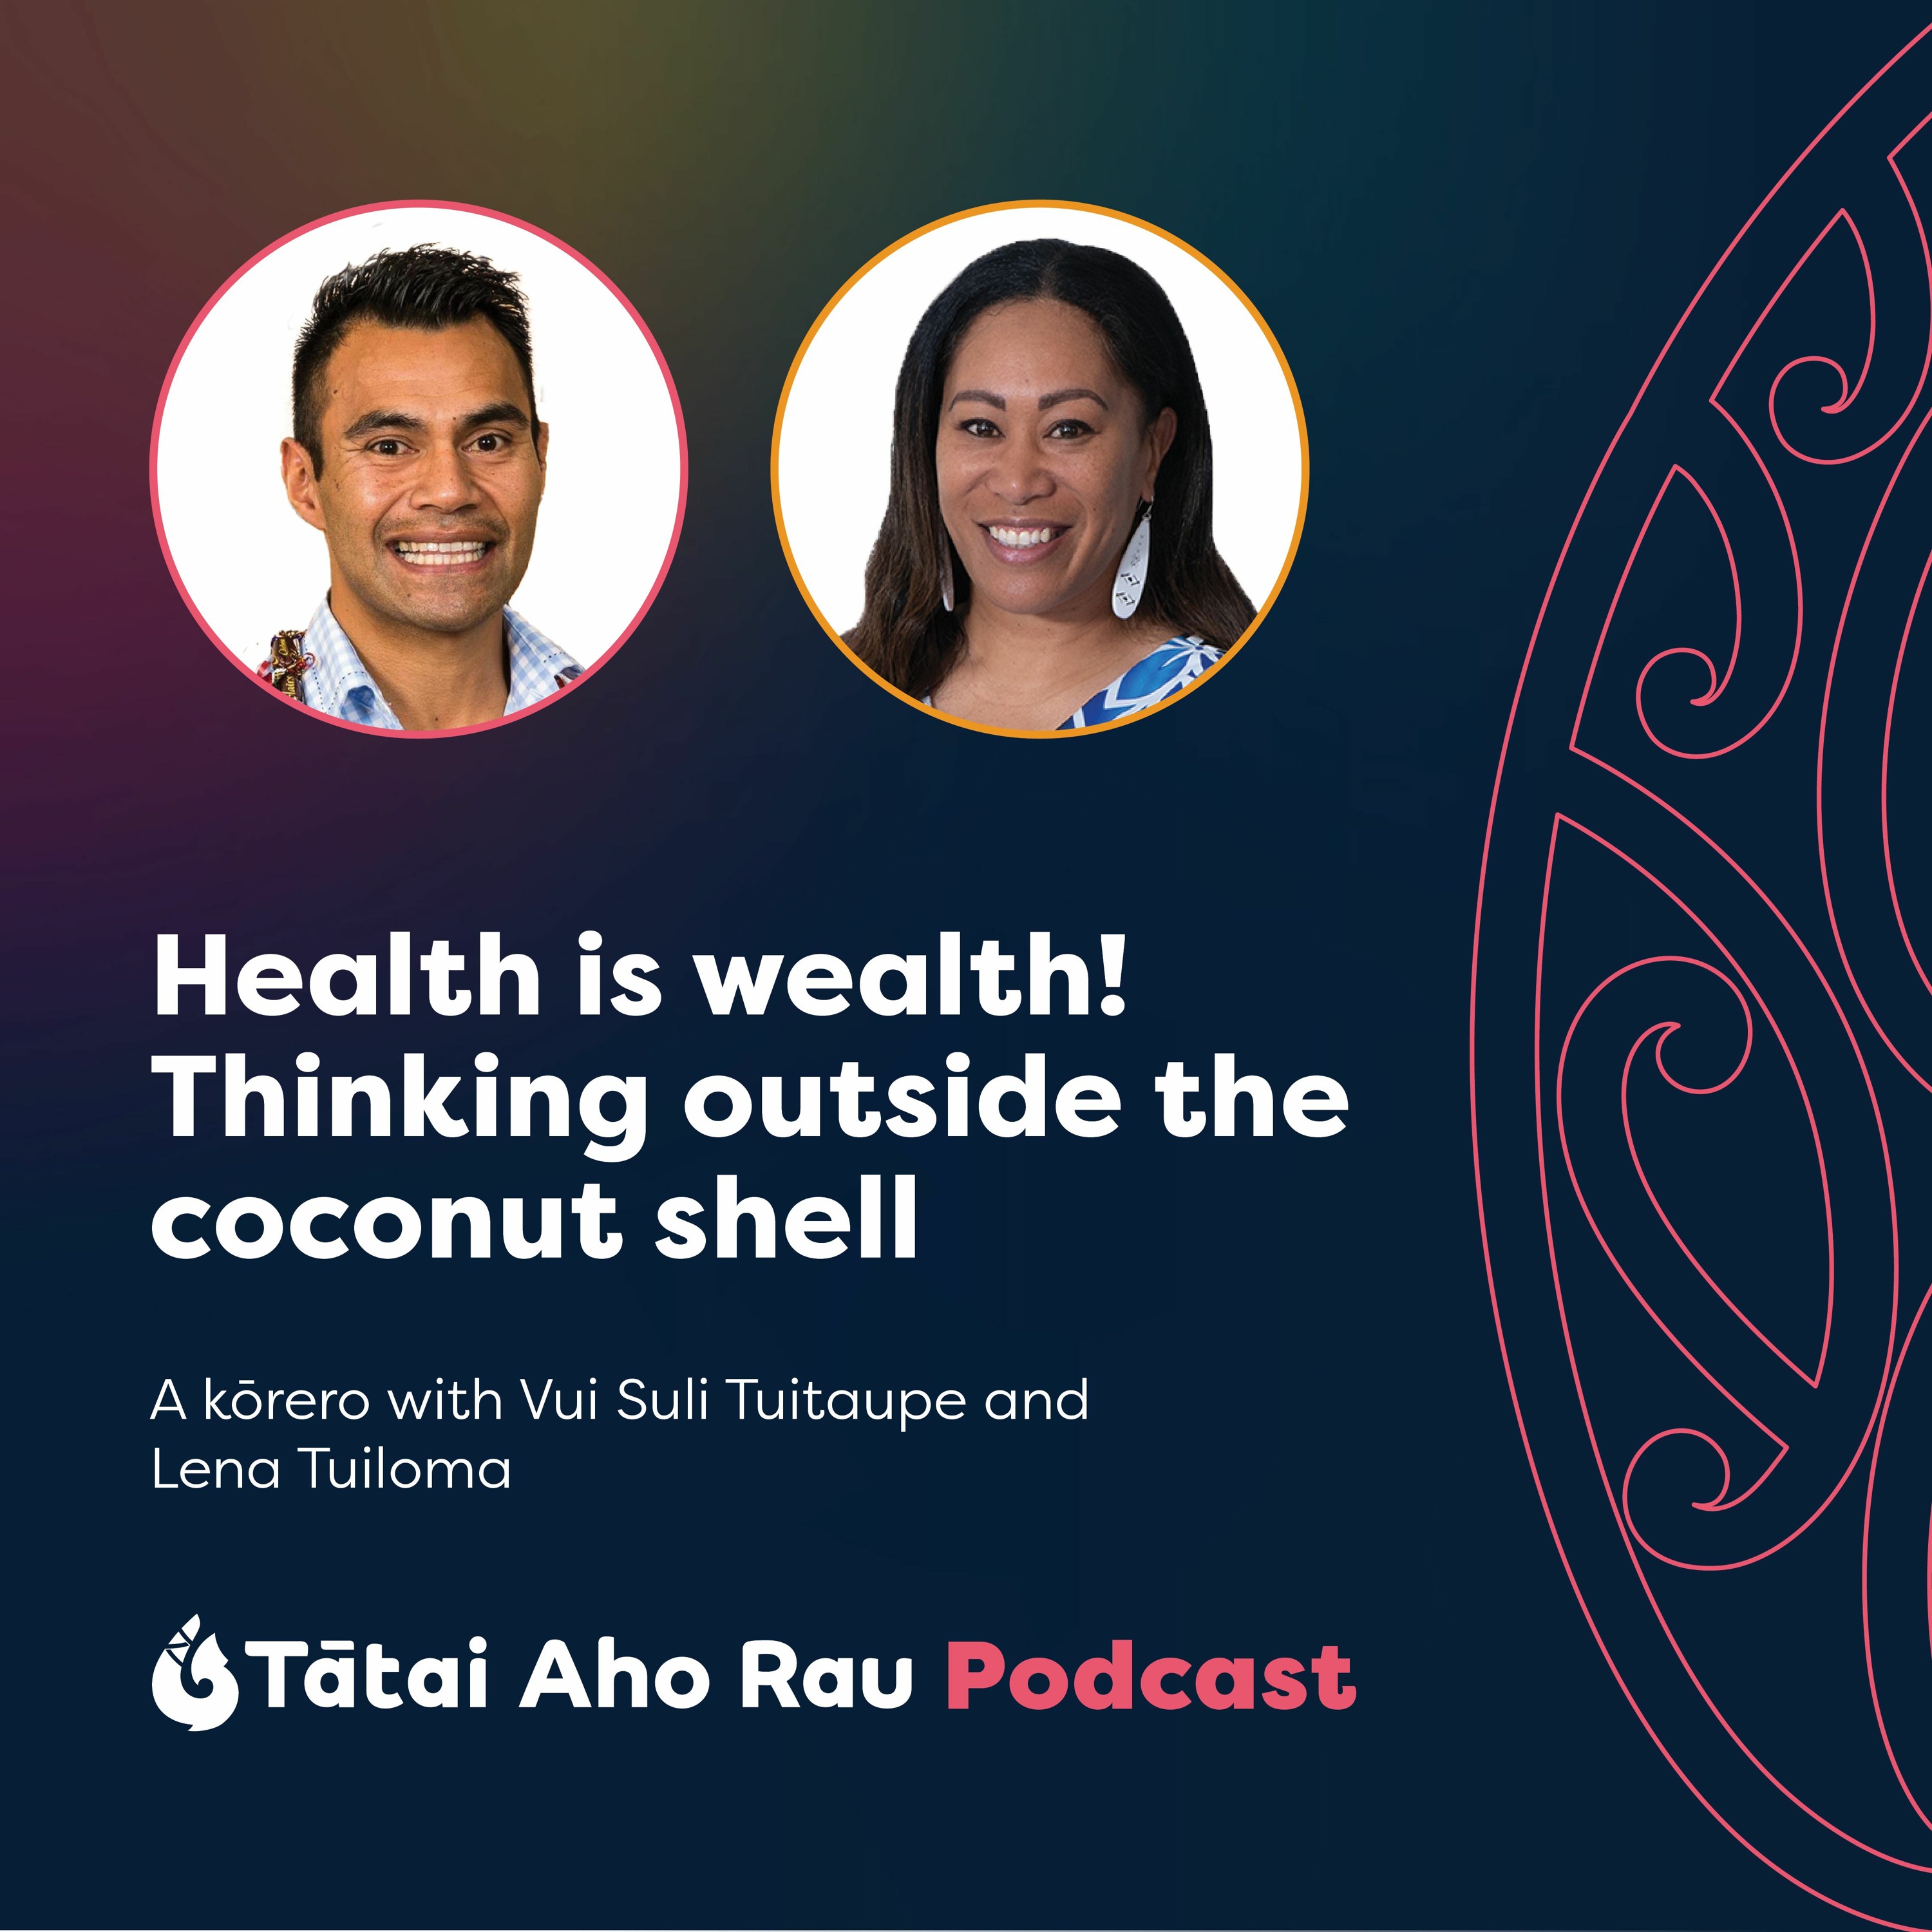 Health is wealth! with Vui Suli Tuitaupe and Lena Tuiloma